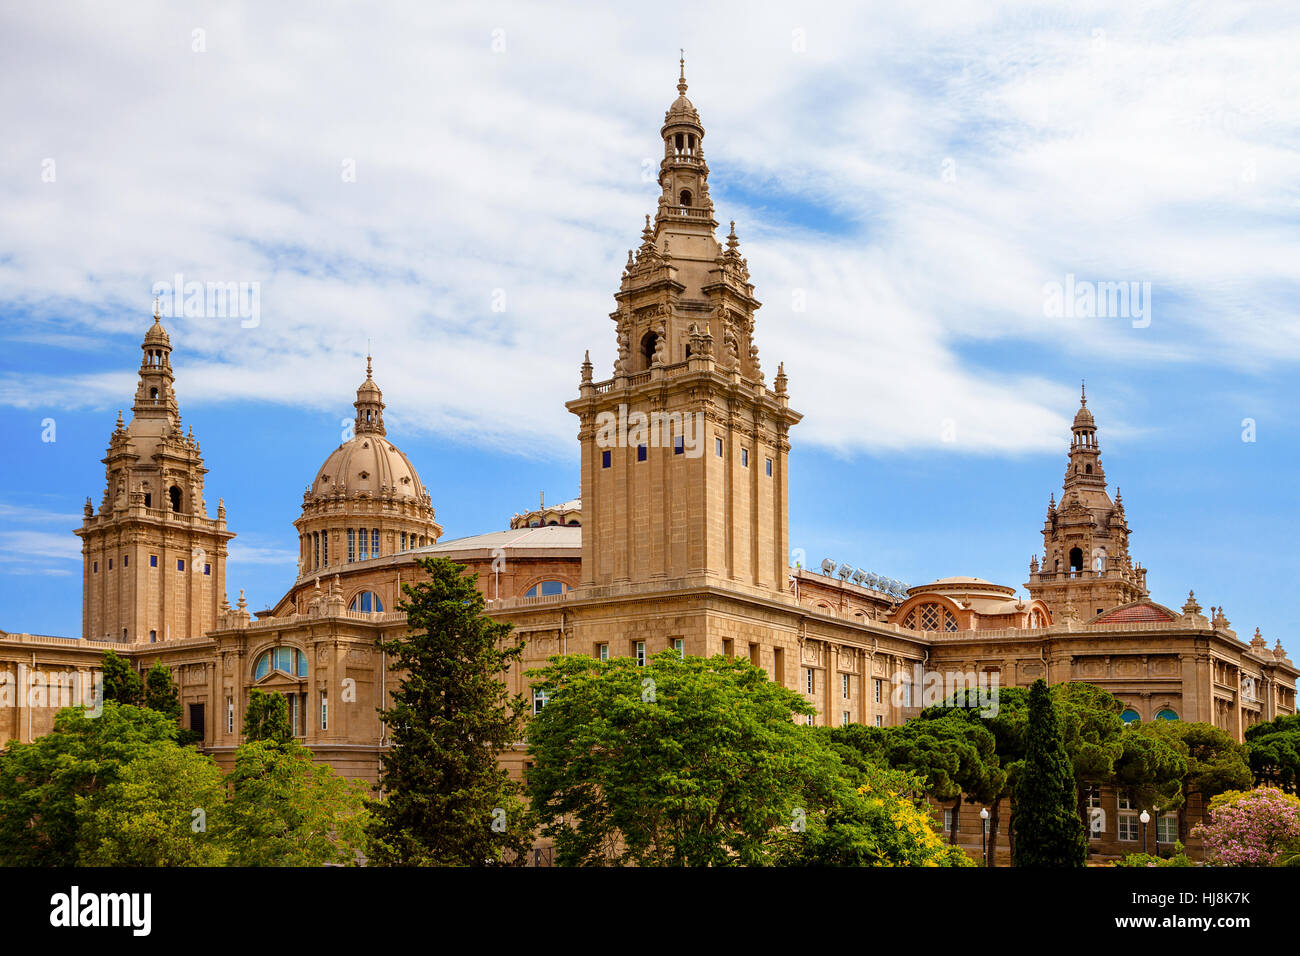 Towers and Central Dome of Palau Nacional, Barcelona, Catalonia, Spain Stock Photo